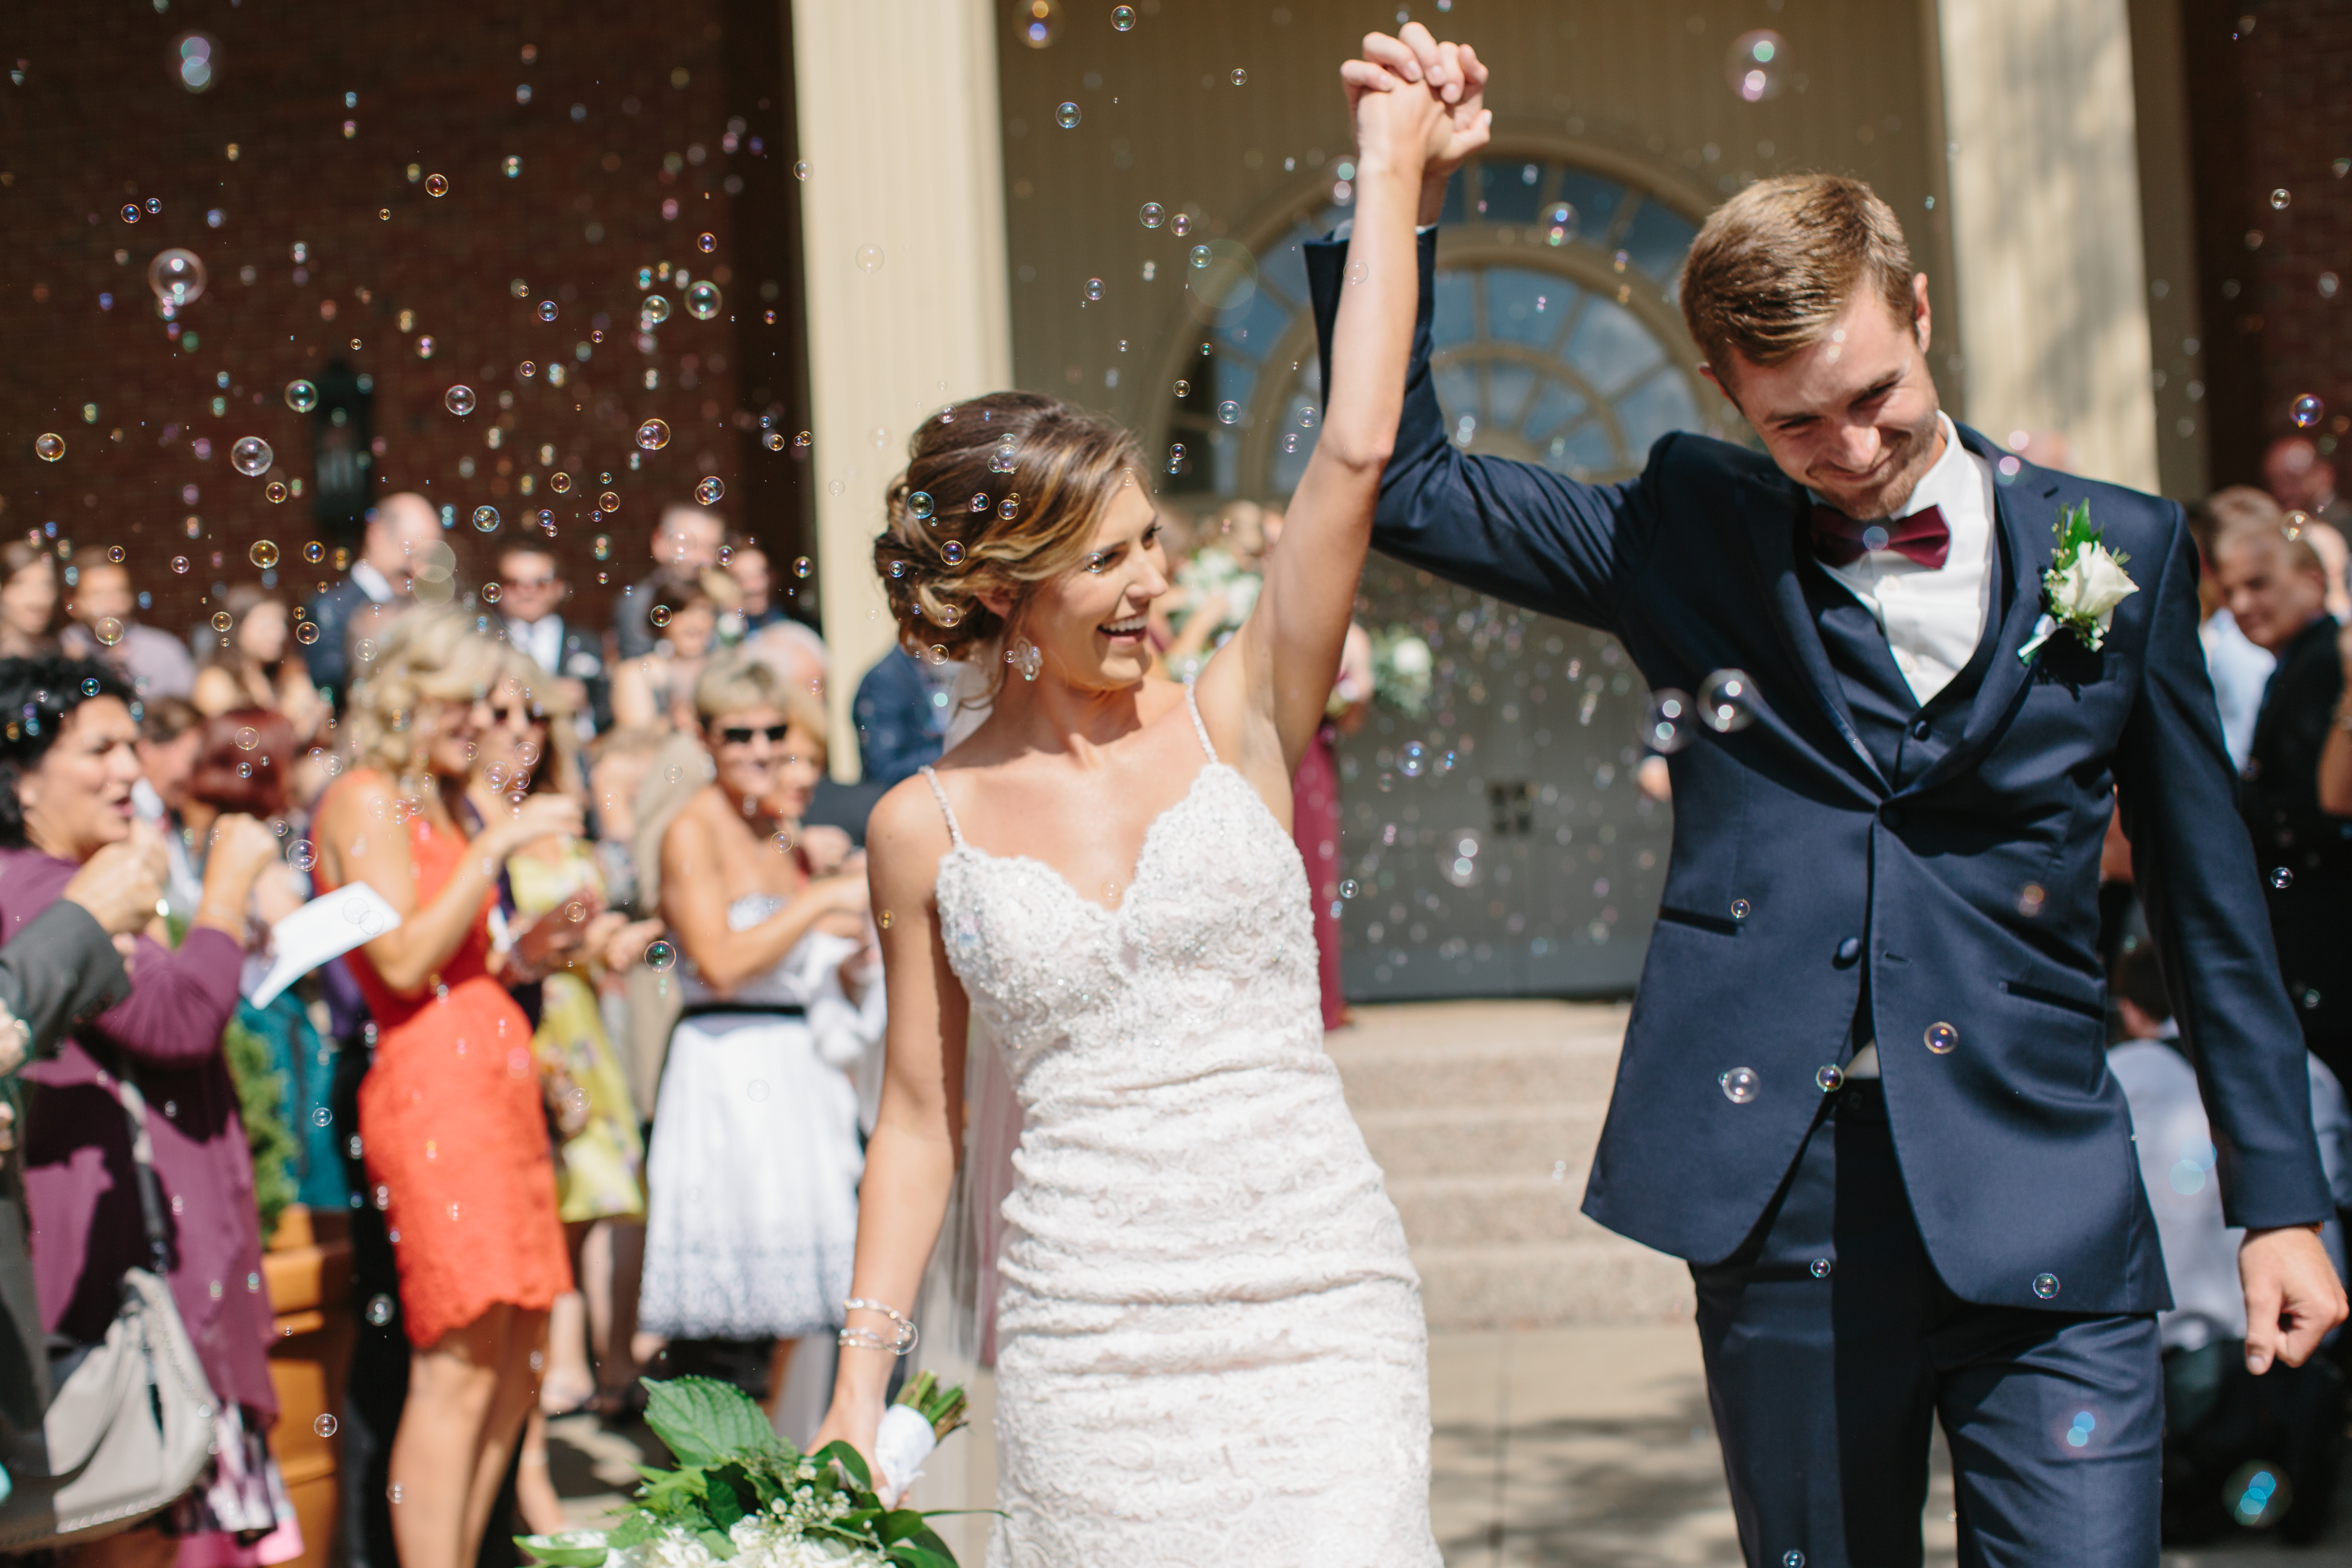 Couple walks through bubbles at wedding ceremony